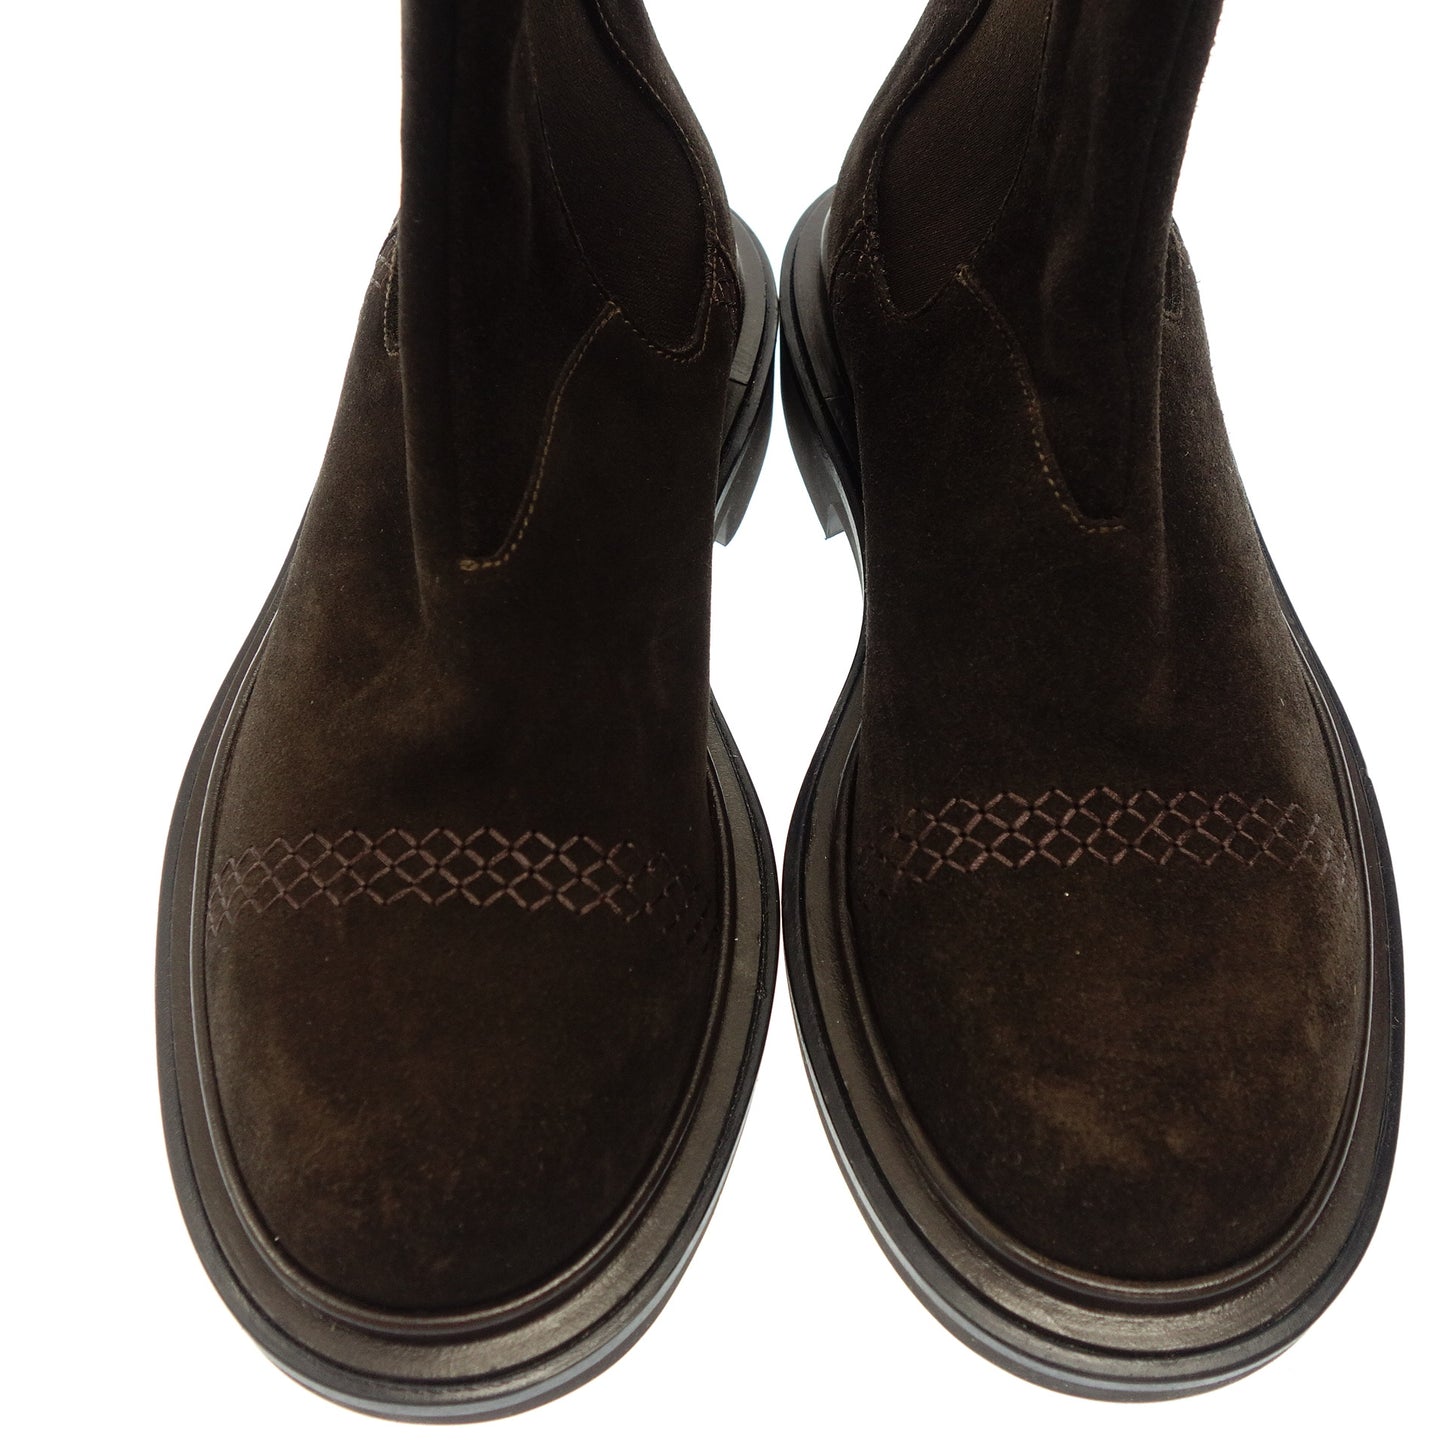 如同全新 ◆ Giorgio Armani 皮鞋 Side Gore 靴子绒面革男式 6 棕色 X2M298 GIORGIO ARMANI [AFC33] 